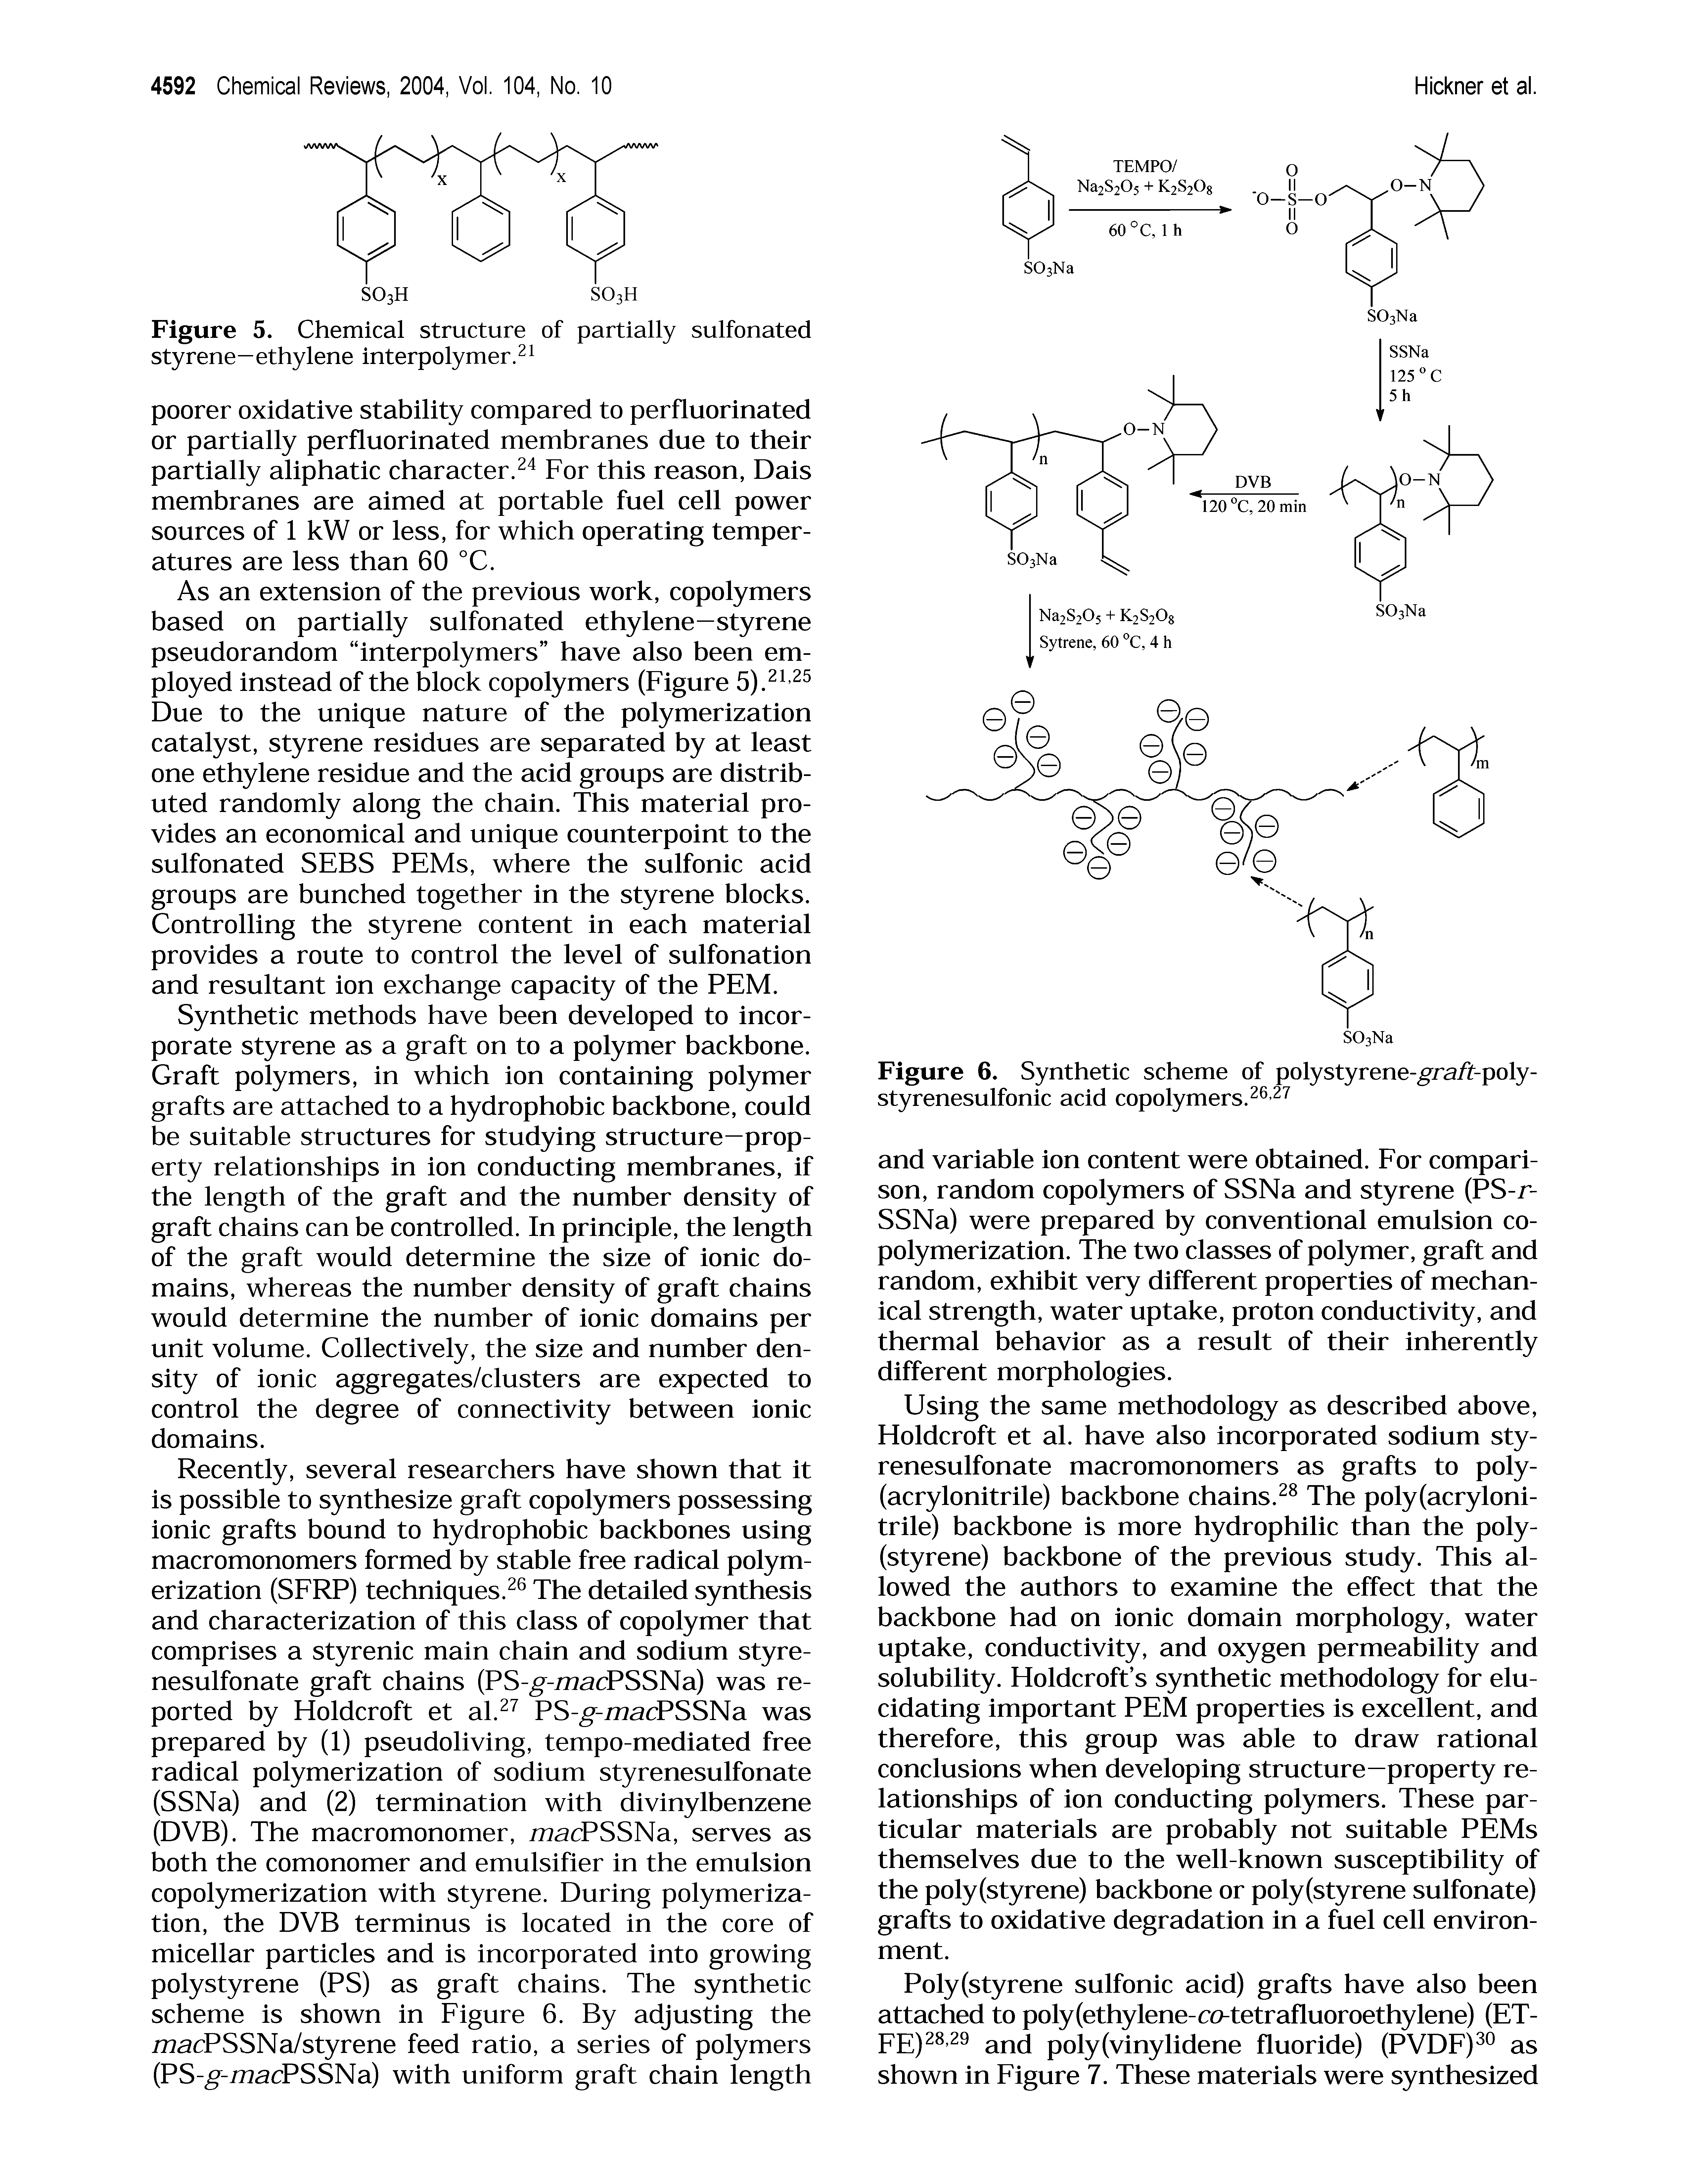 Figure 6. Synthetic scheme of polystyrene- ra/t-poly-styrenesulfonic acid copolymers.